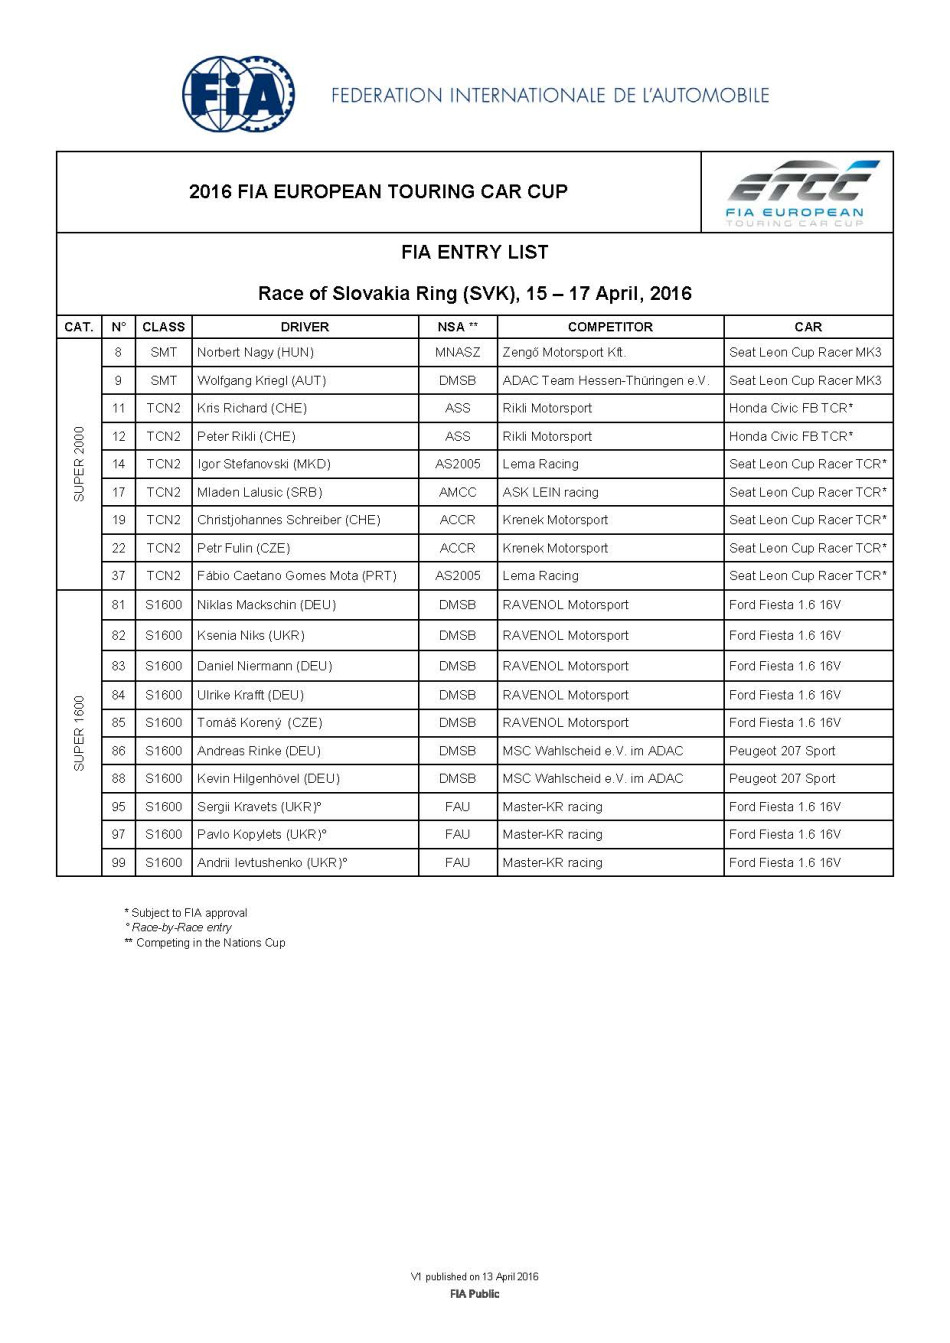 2016 FIA ETCC Race of Slovakia Ring Entry List